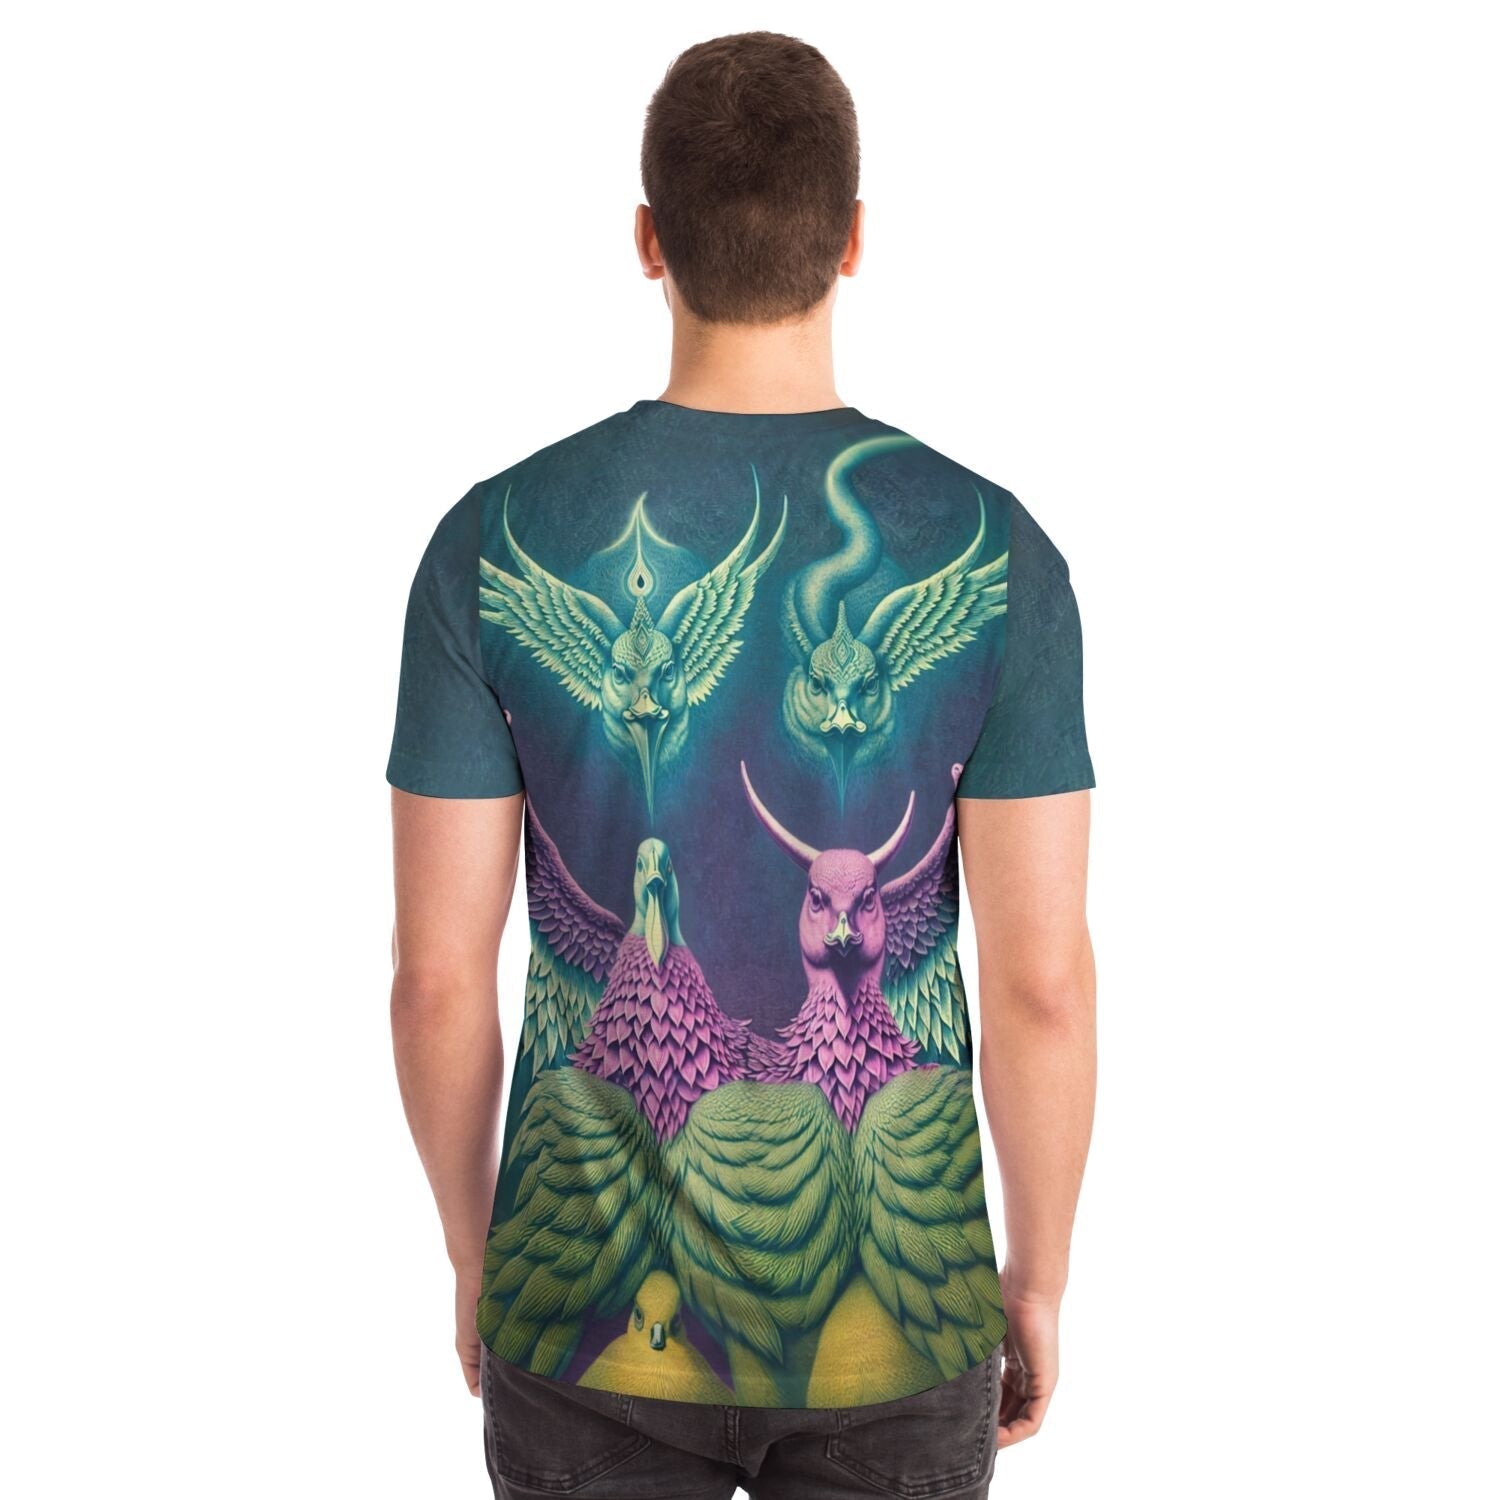 T-shirt Duck Baphomet: Neopagan Surreal Mythology | Balance, Strength, Peace | Mysterious Avian Deity | Occult Graphic Art T-Shirt